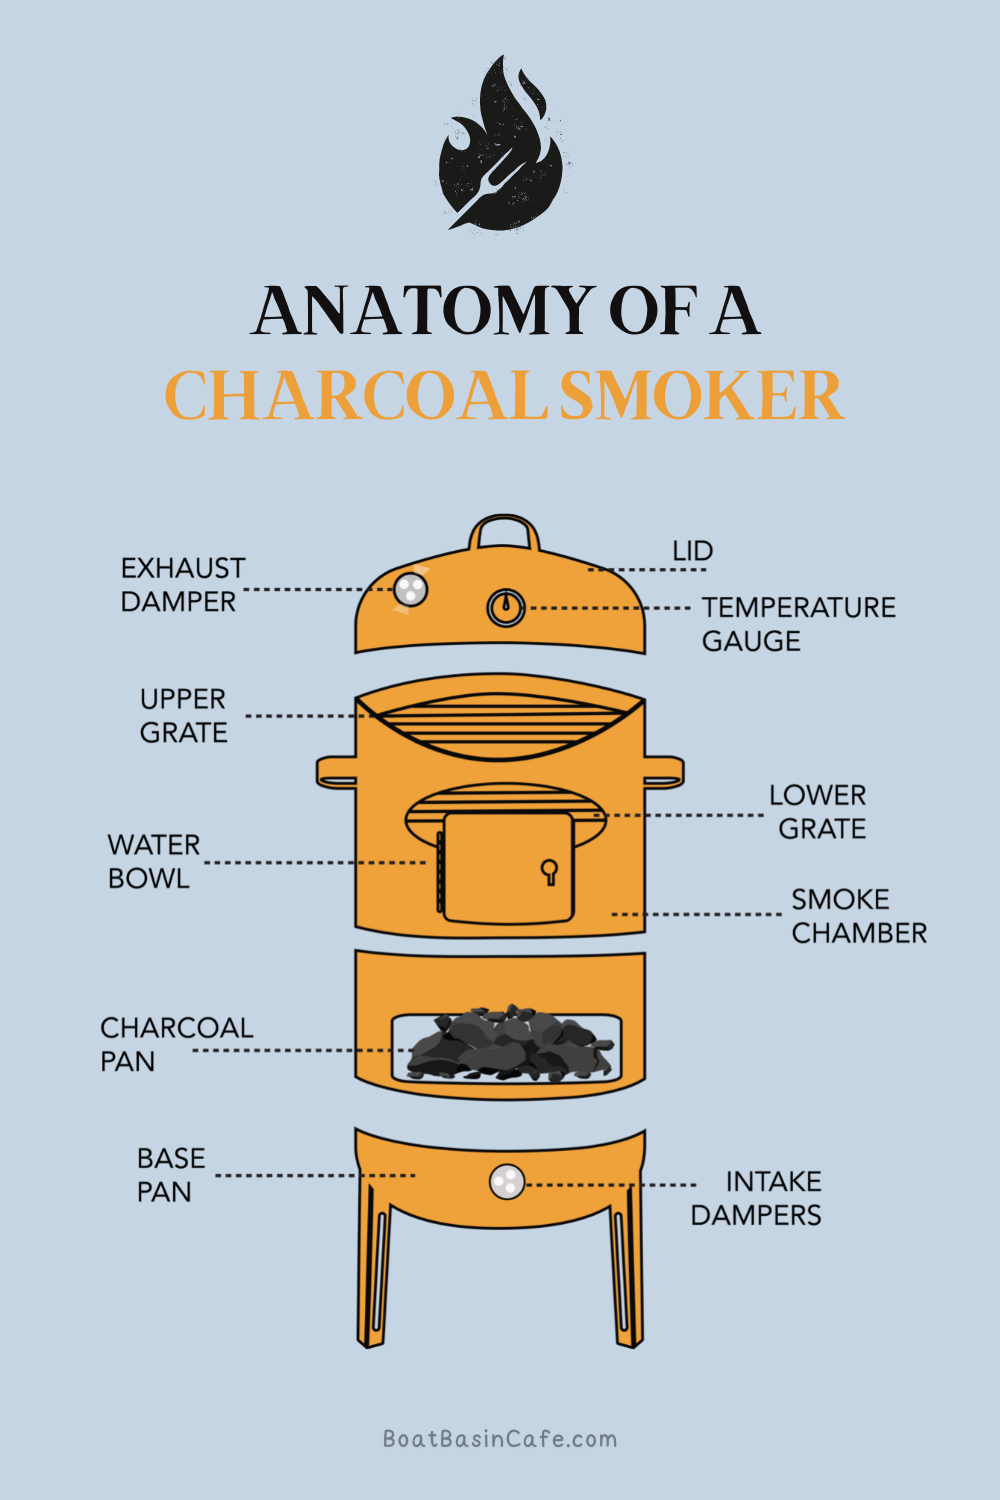 Anatomy of a charcoal smoker.